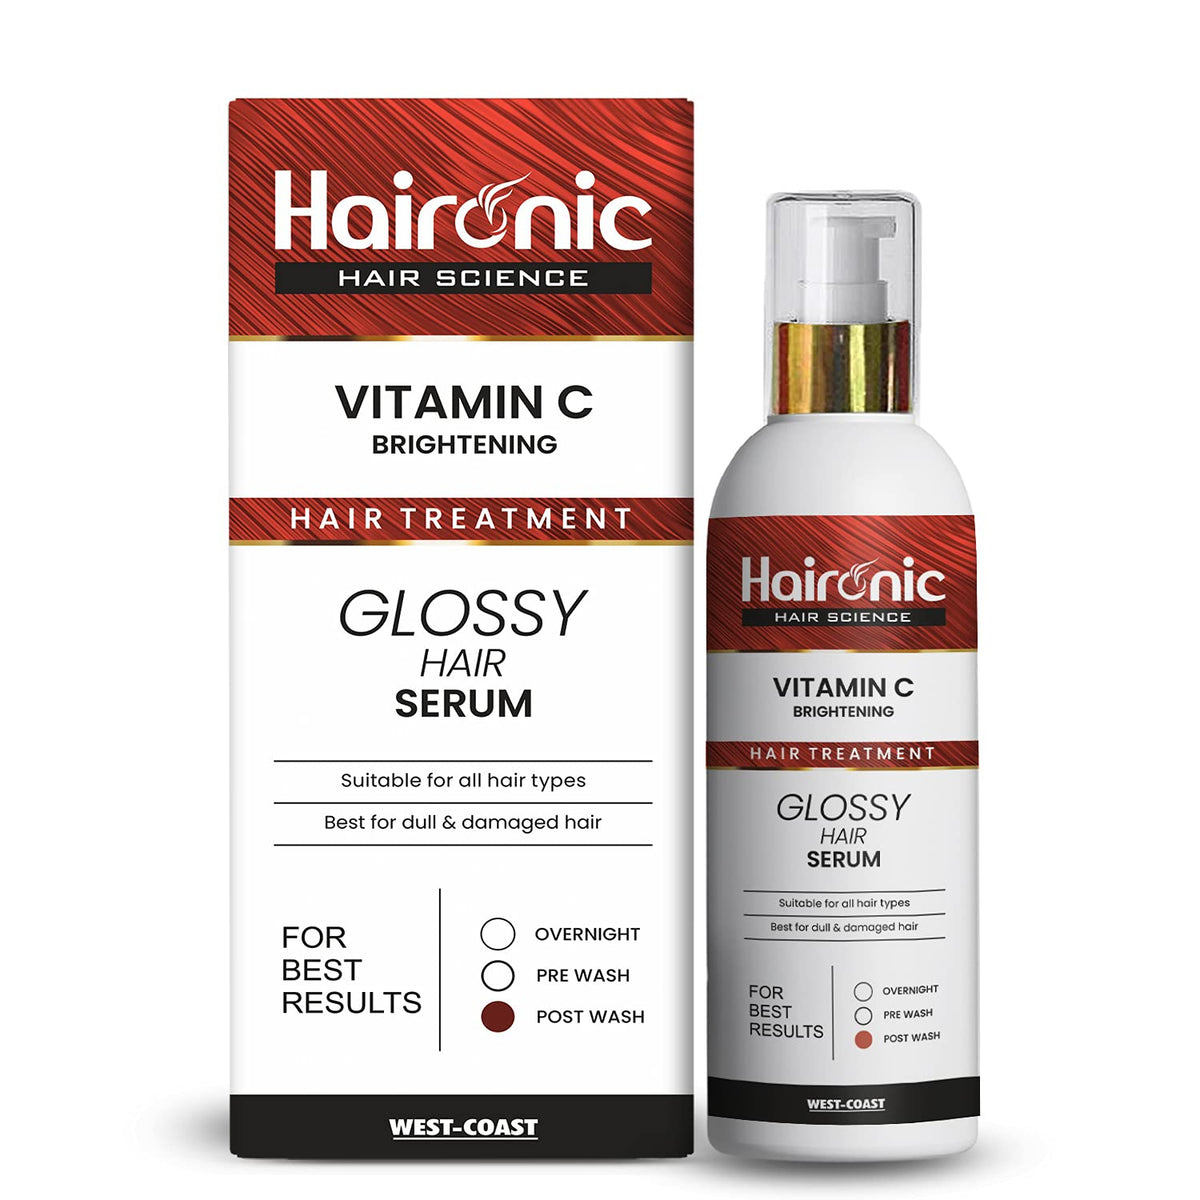 Haironic Vitamin C Hair Brightening Treatment Hair Serum | Control for Dull & Damaged Hair | Hair Fall Control | For Strong, Smooth, Shiny Hair – 100ml